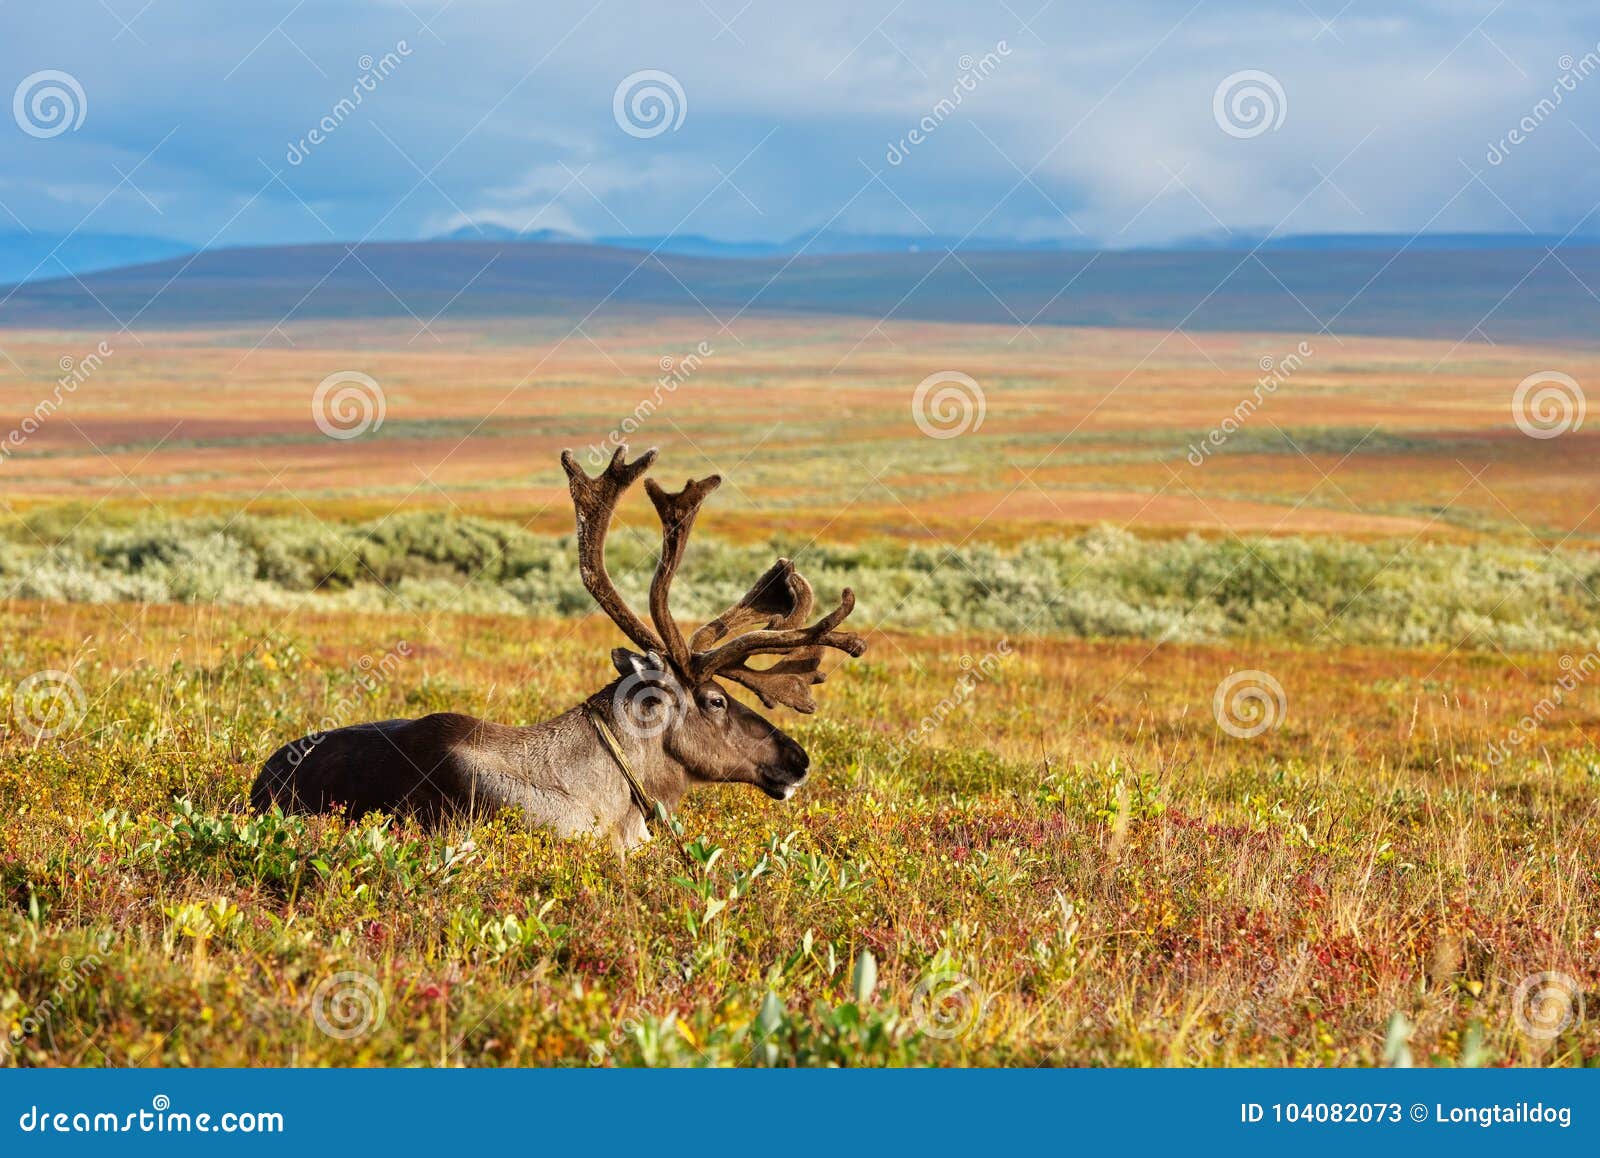 reindeer grazes in the polar tundra.